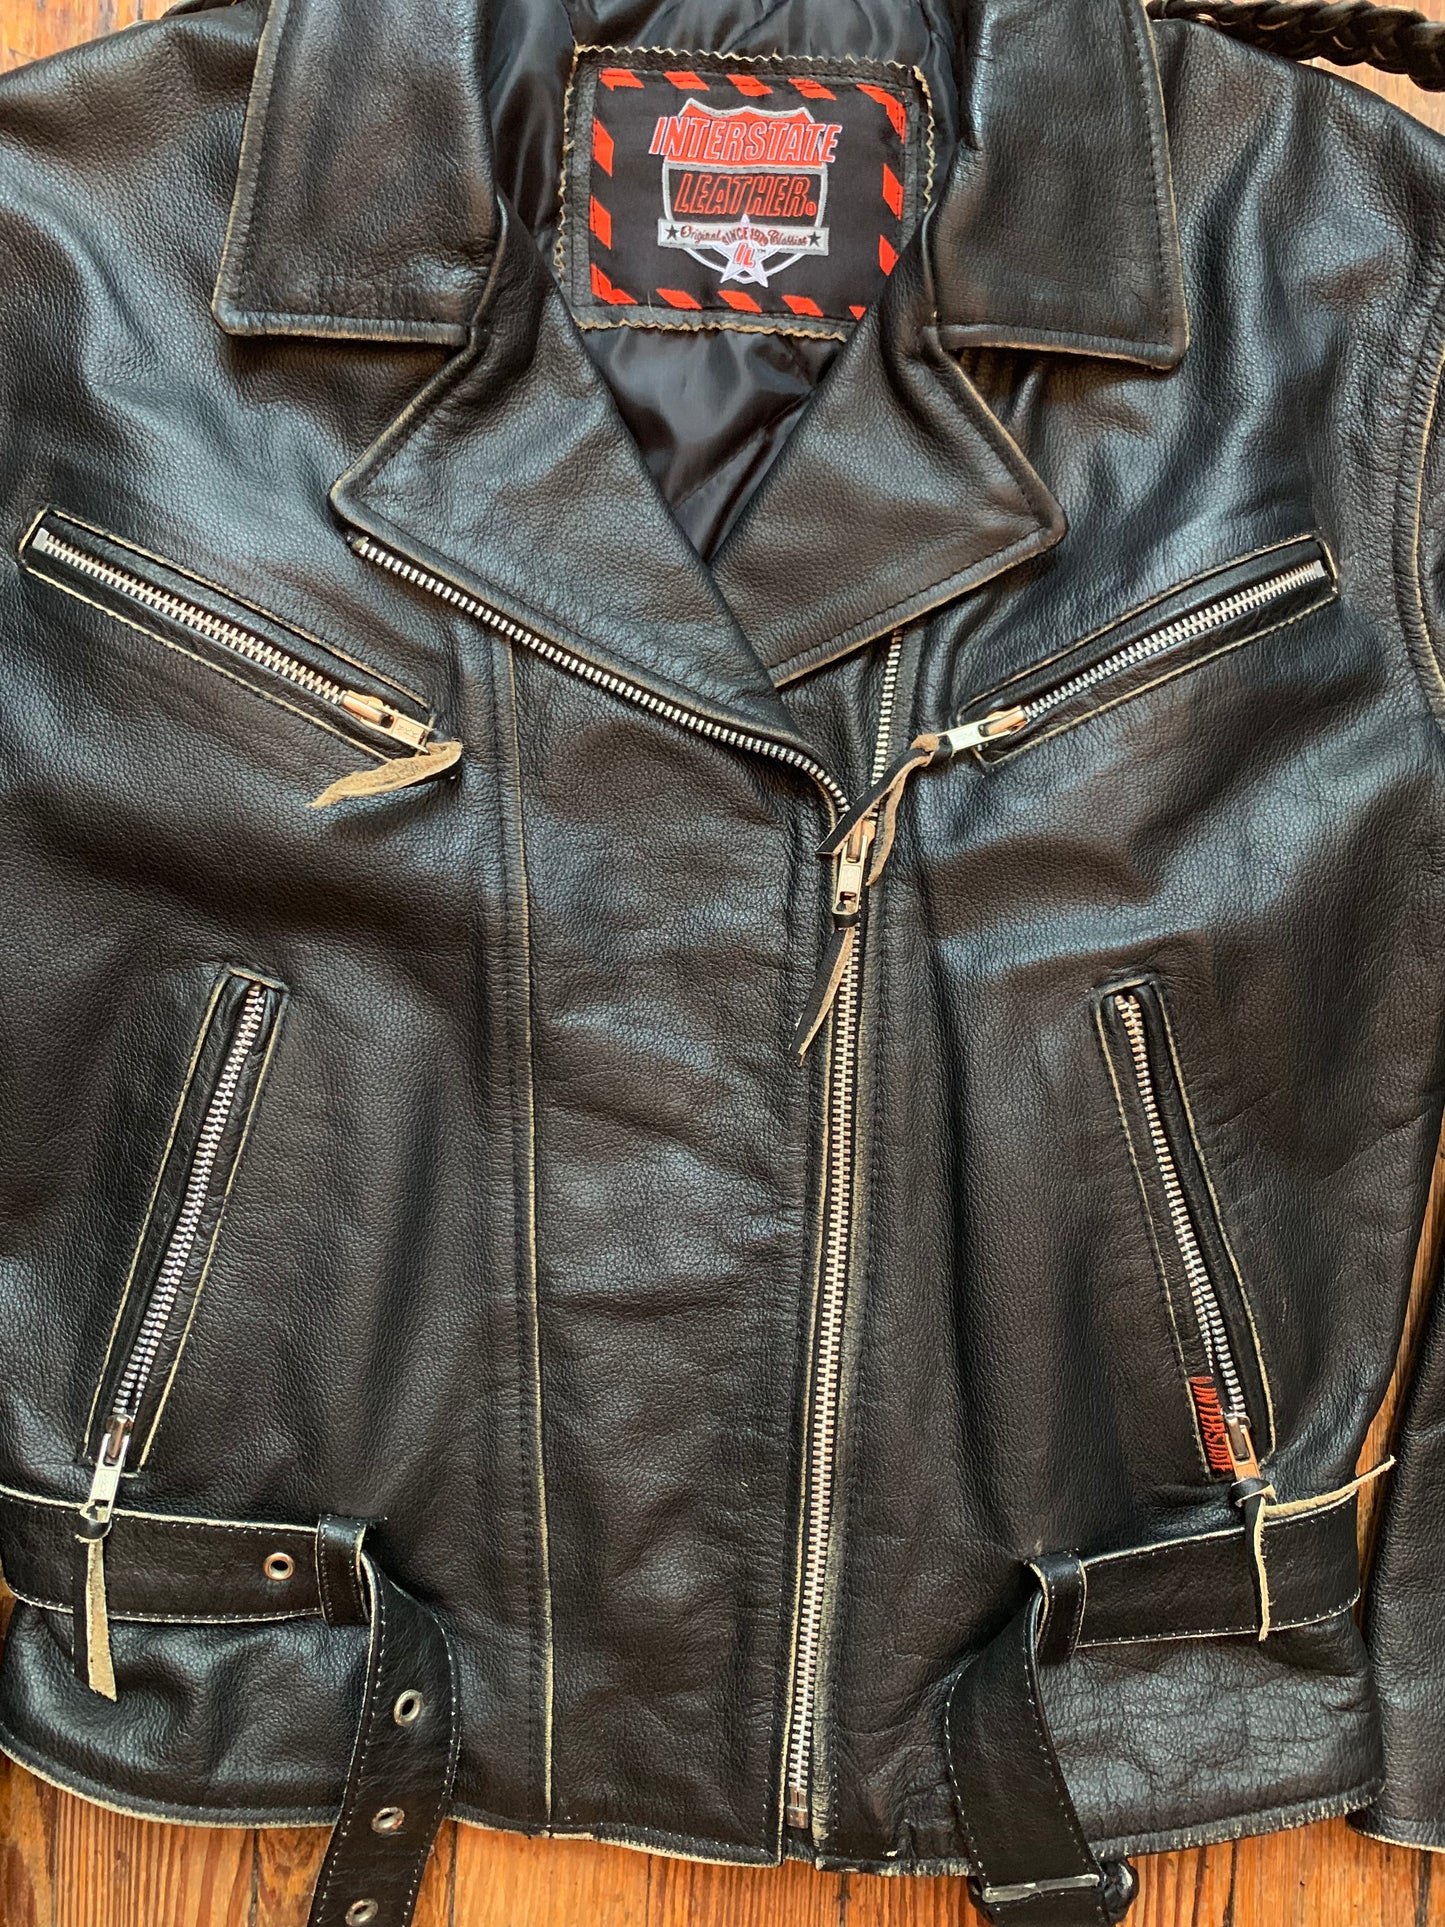 Vintage Interstate Leather Motocycle Jacket w/ Braid Detail